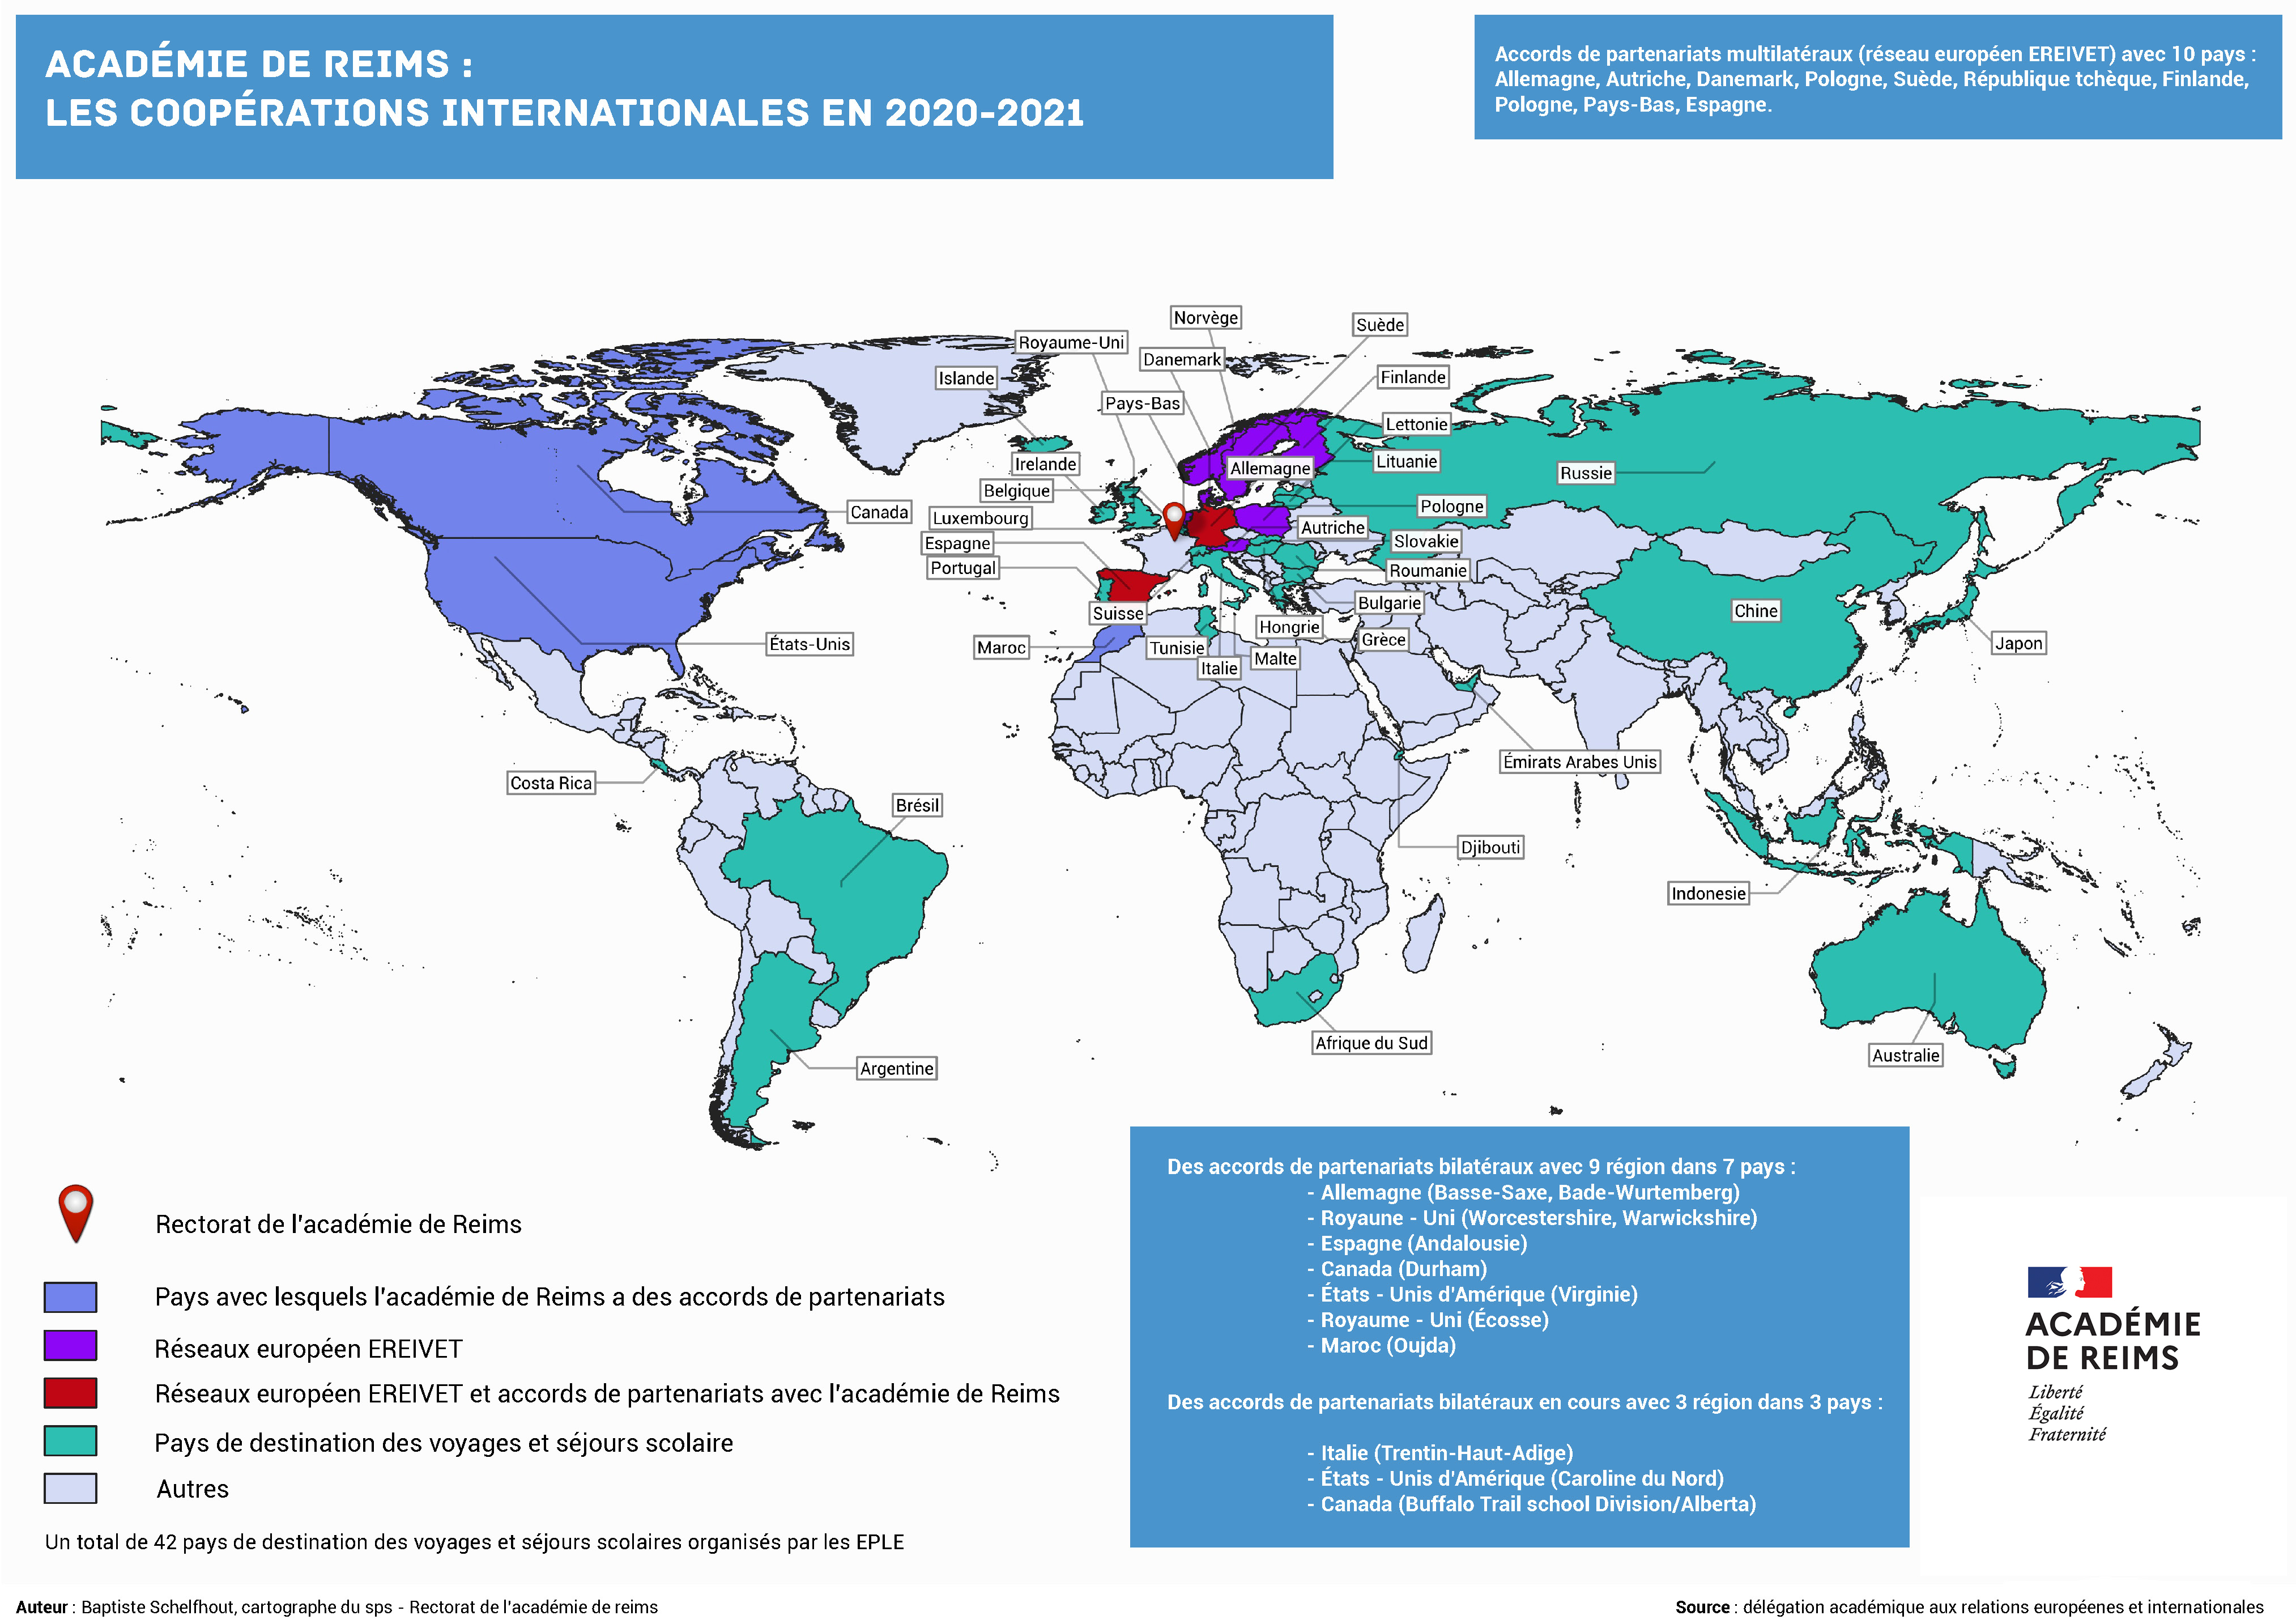  Cartographie des partenariats internationaux